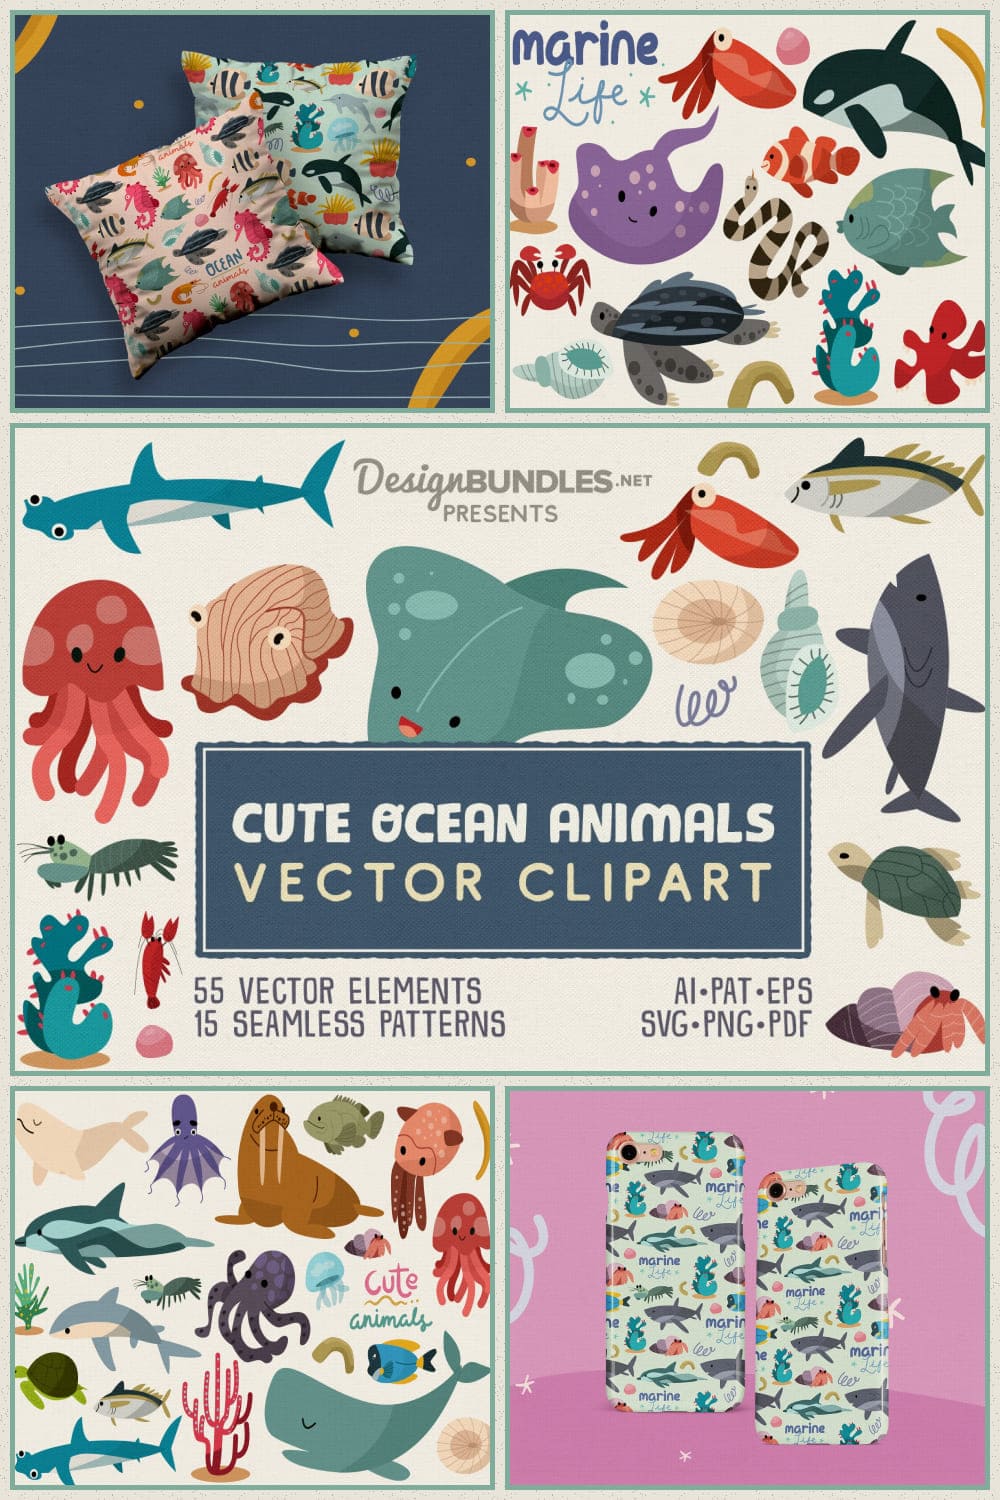 Cute Ocean Animals Vector Clipart Pack pinterest image.